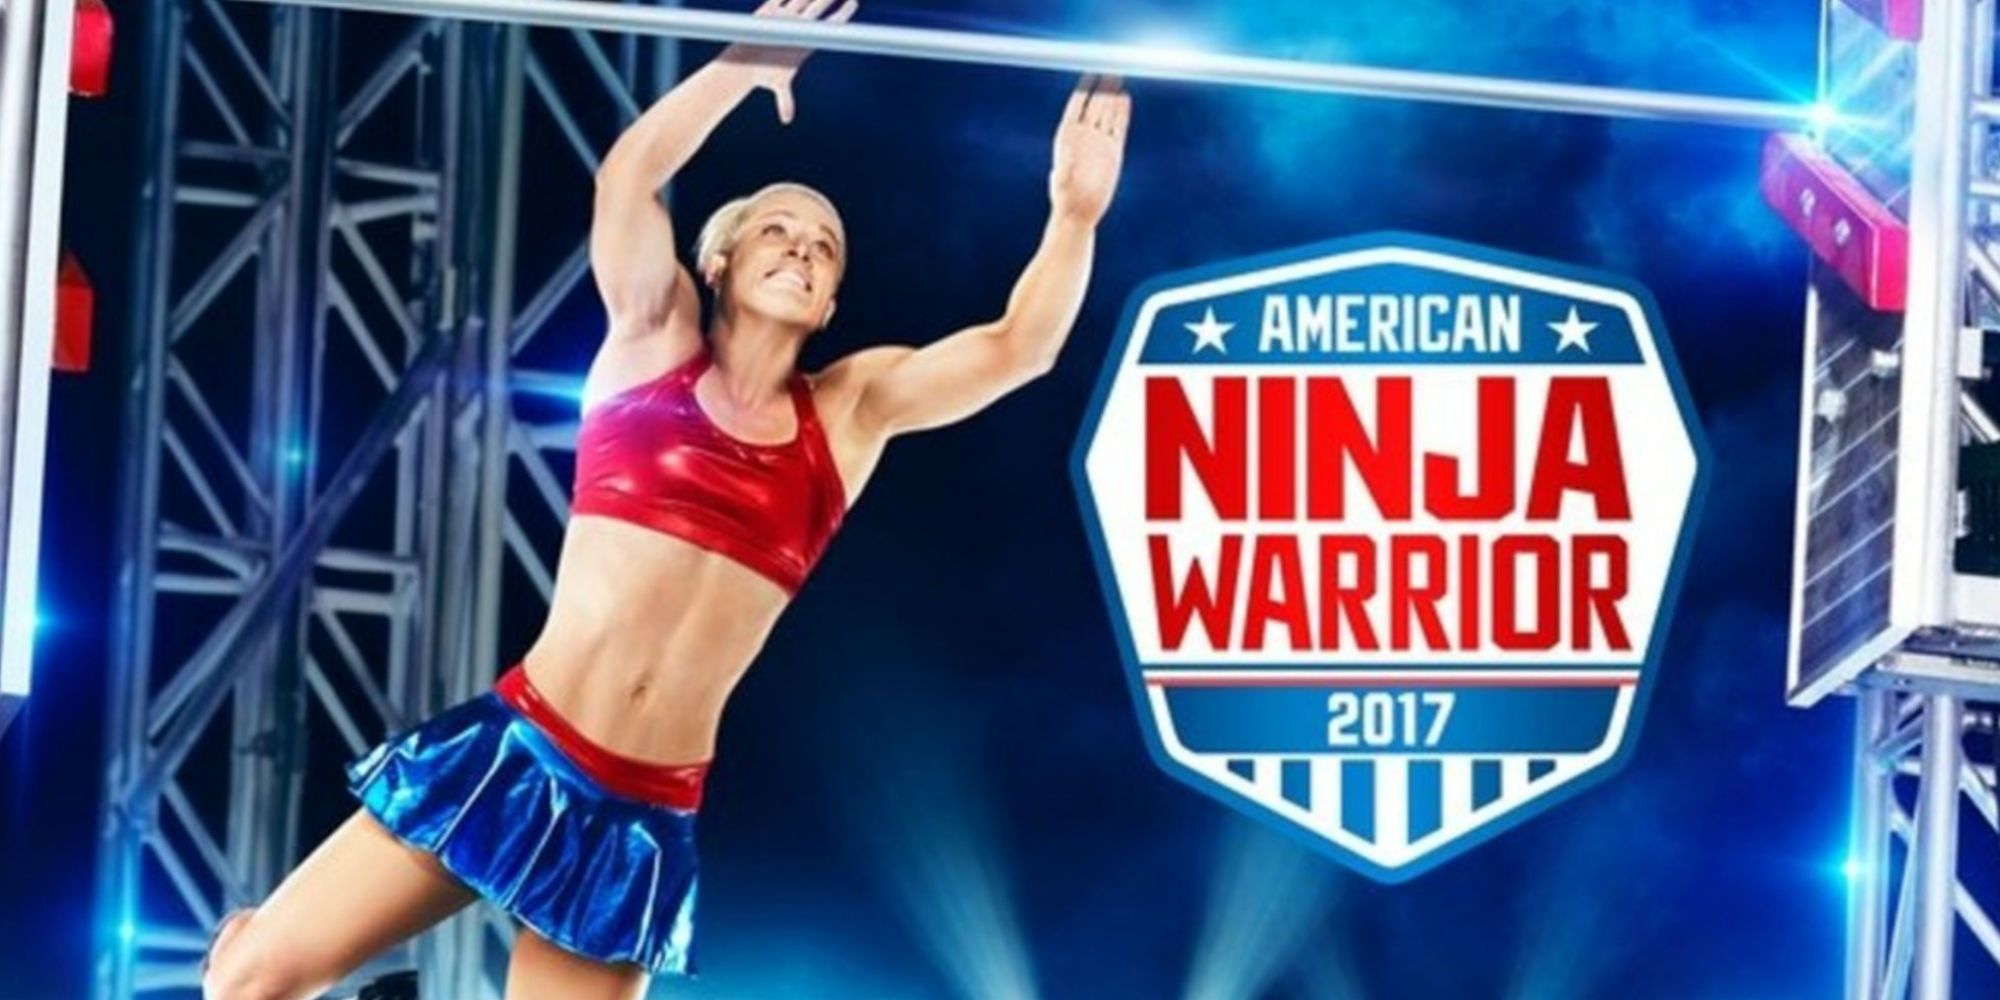 American Ninja Warrior 2017 season 9